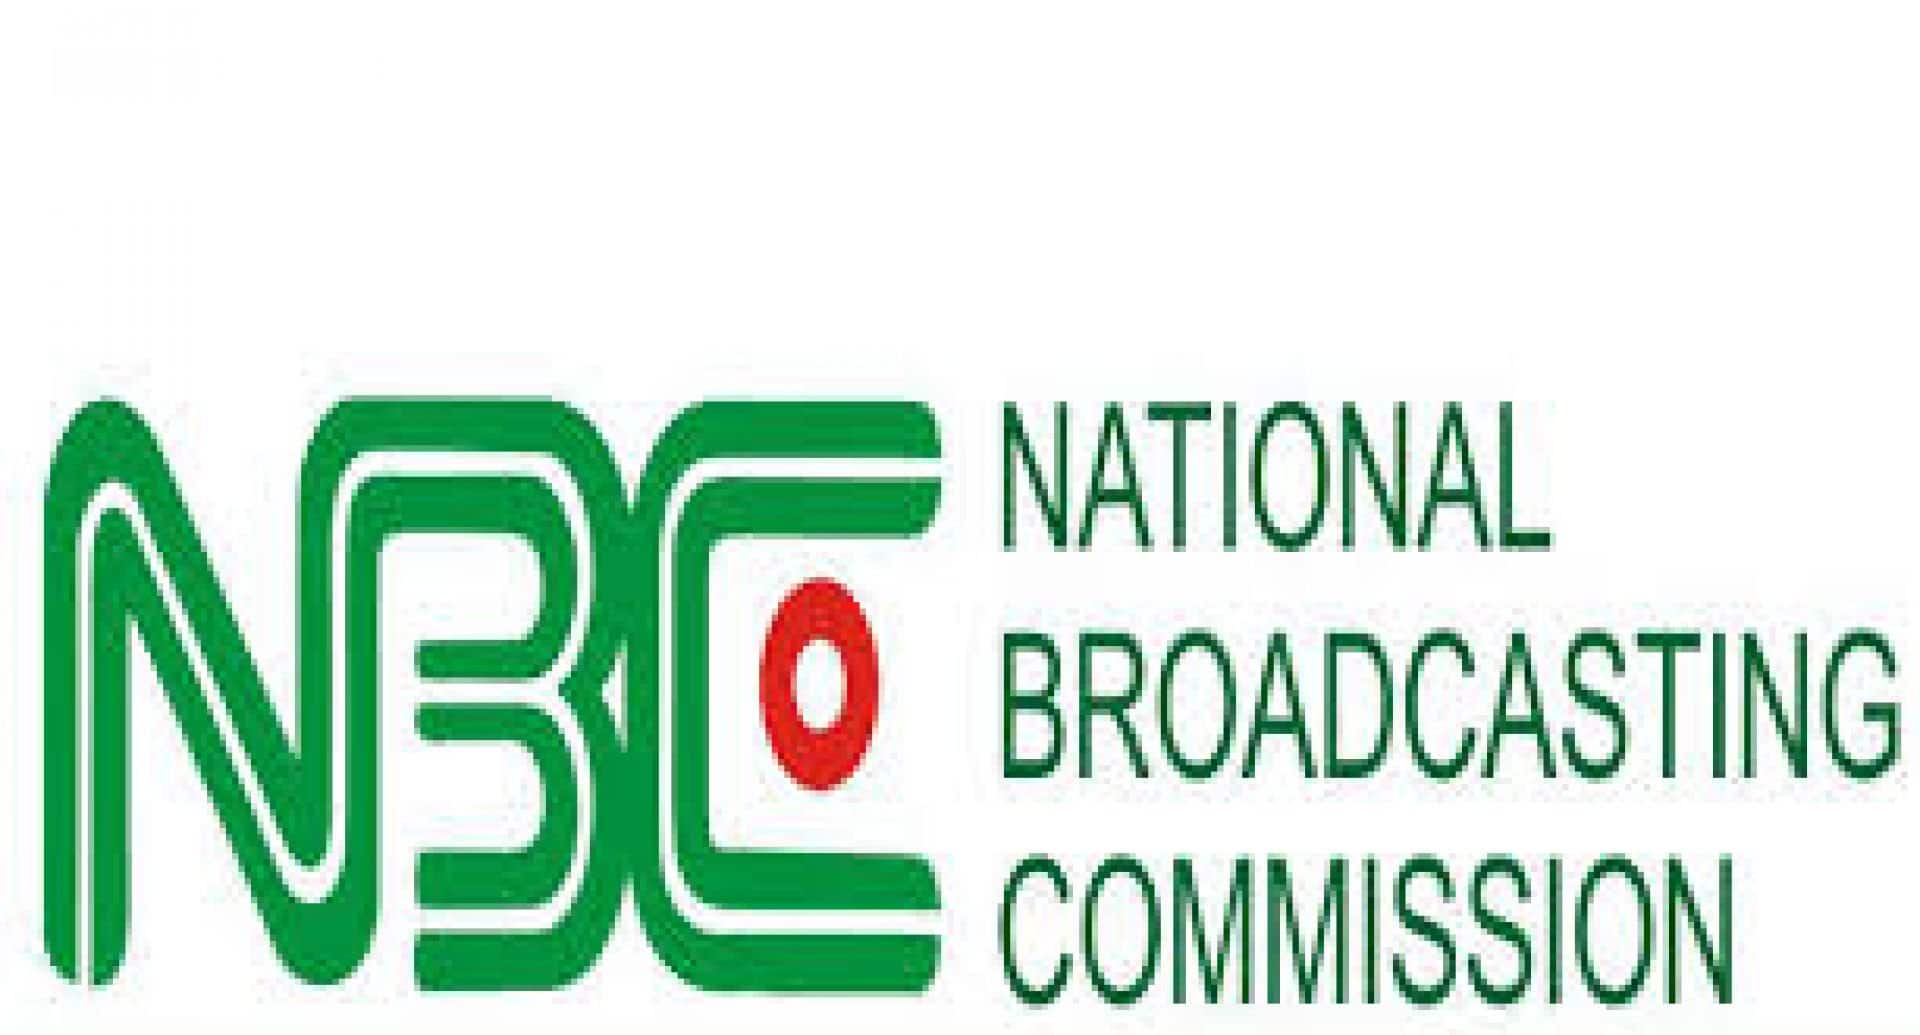 Filmmaker Uwagbai Sues NBC Over Controversial Broadcasting Code